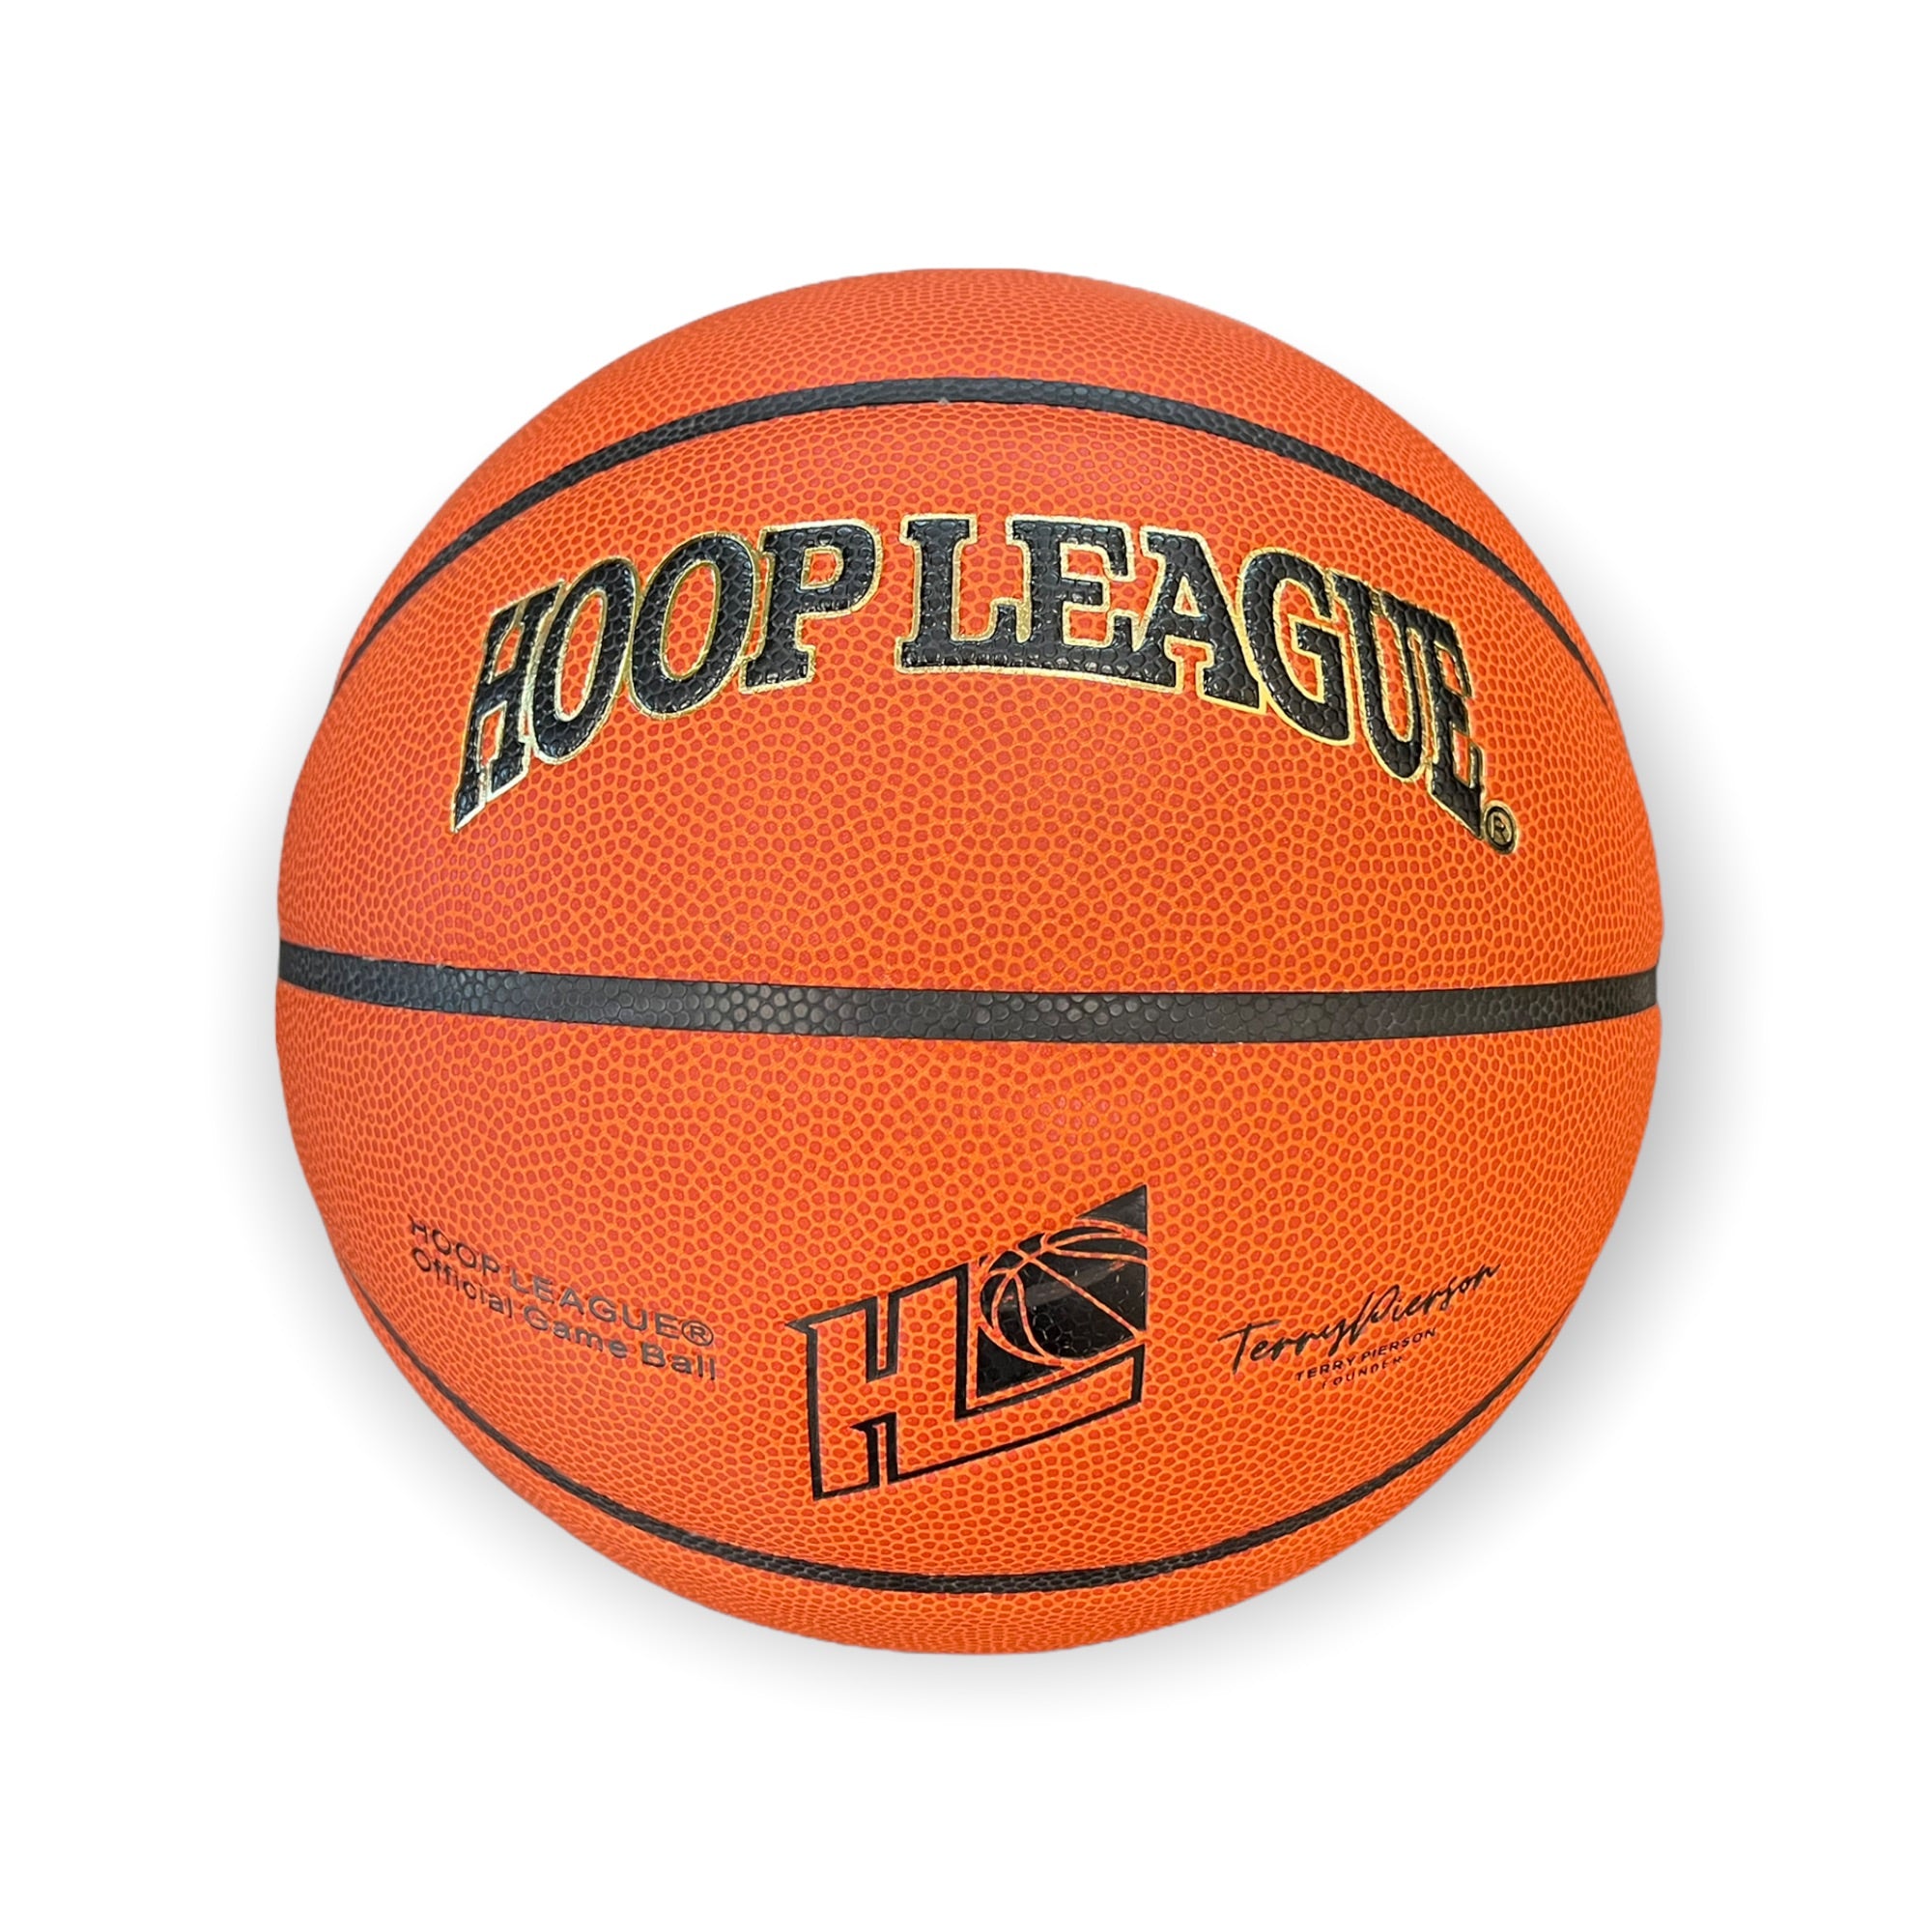 Microfiber Leather Indoor Game Basketball | Hoop League Basketball